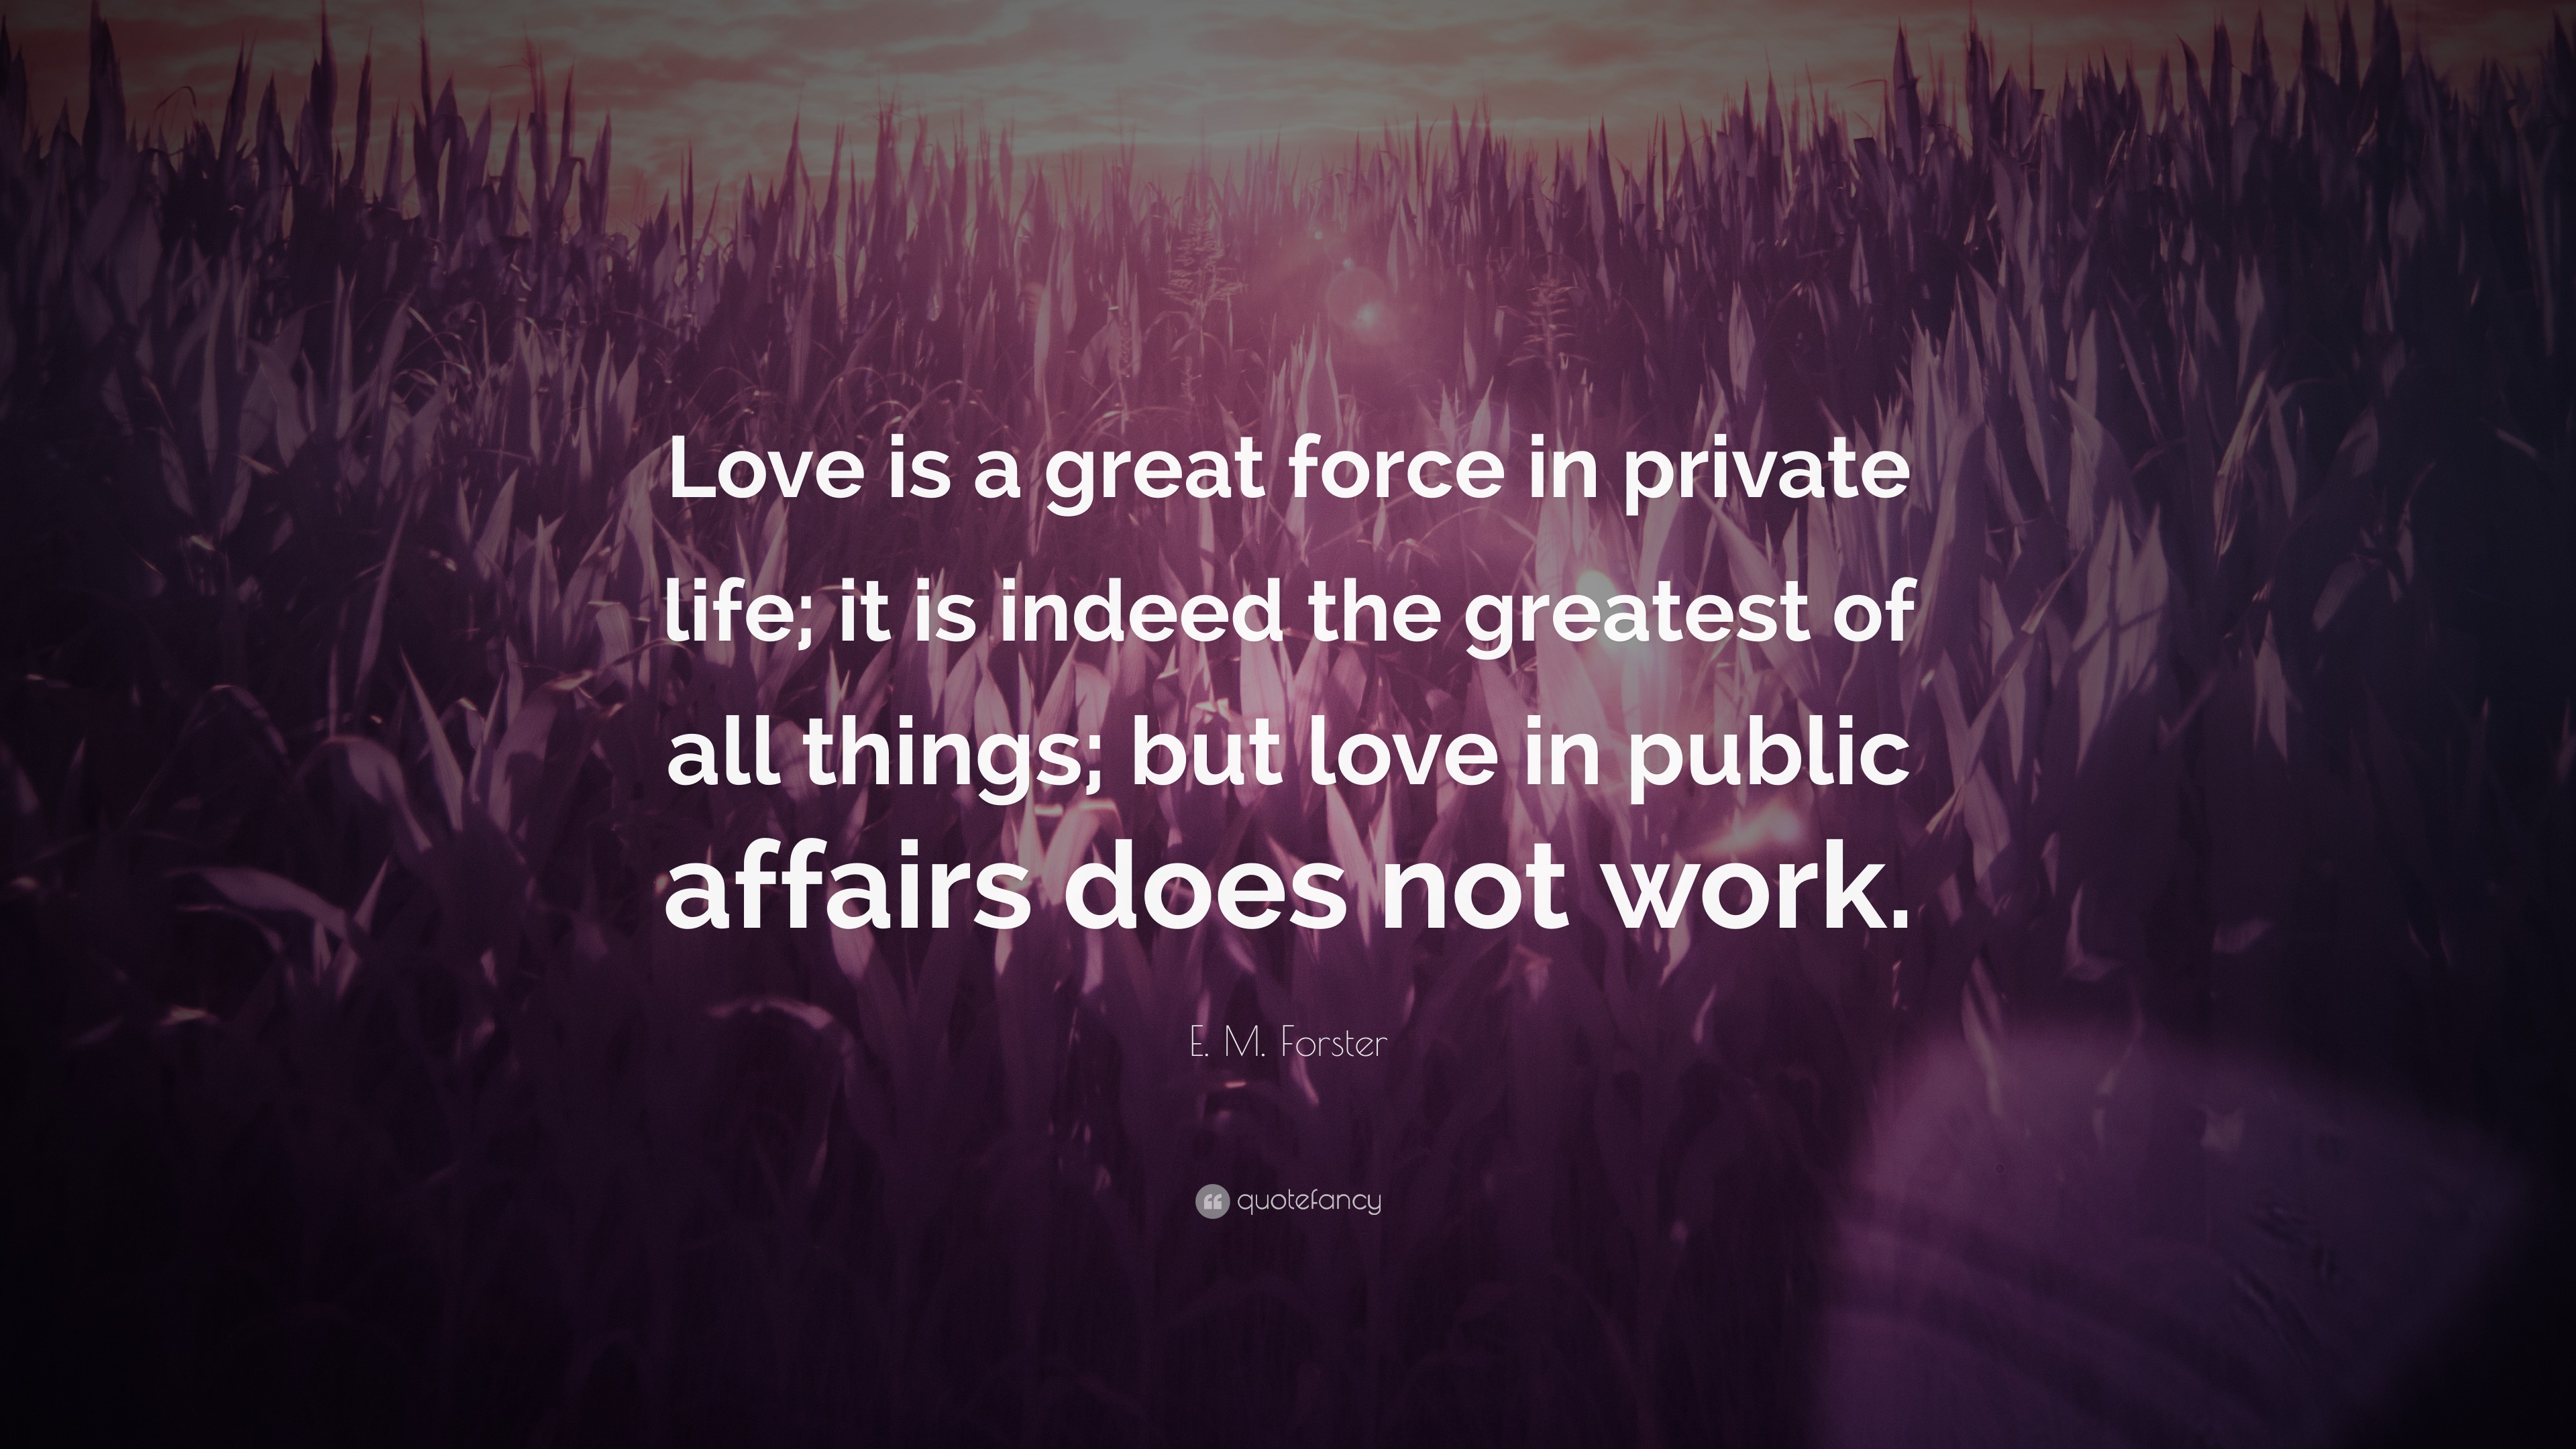 Private Love Affairs